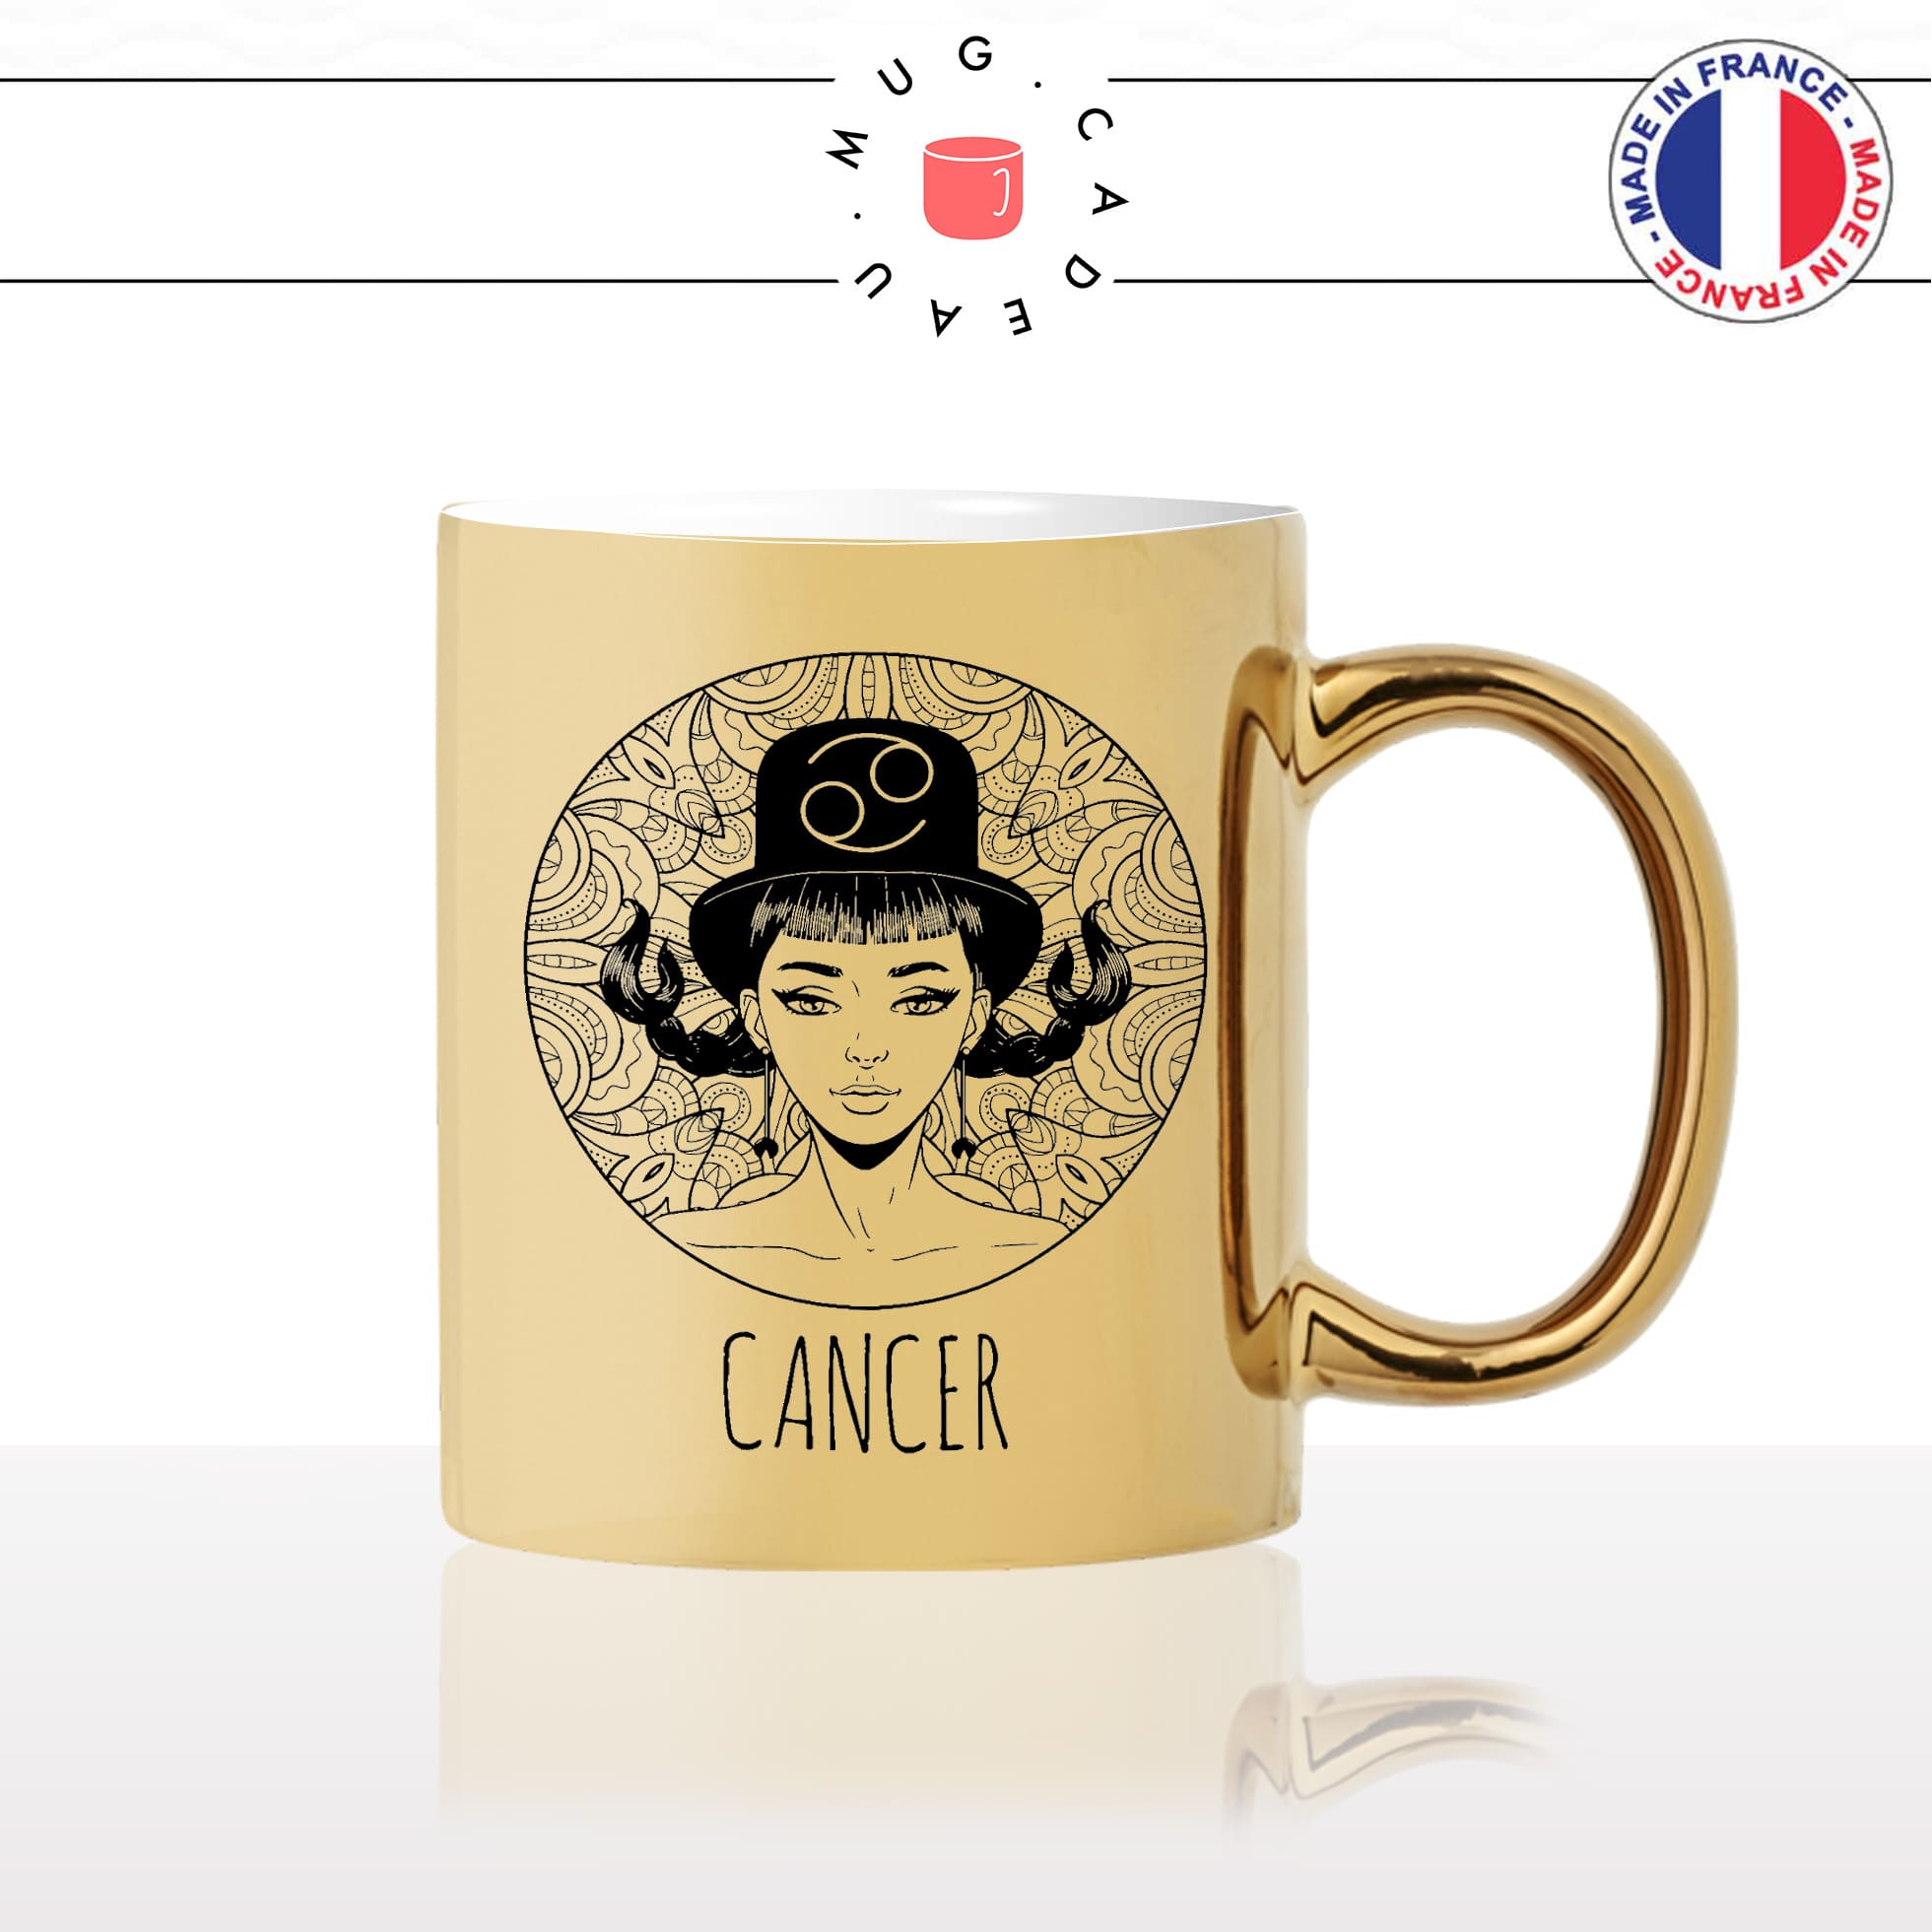 mug-tasse-or-doré-gold-signe-astrologique-astro-horoscope-cancer-dessin-femme-mignon-fun-idée-cadeau-originale-personnalisé2-min